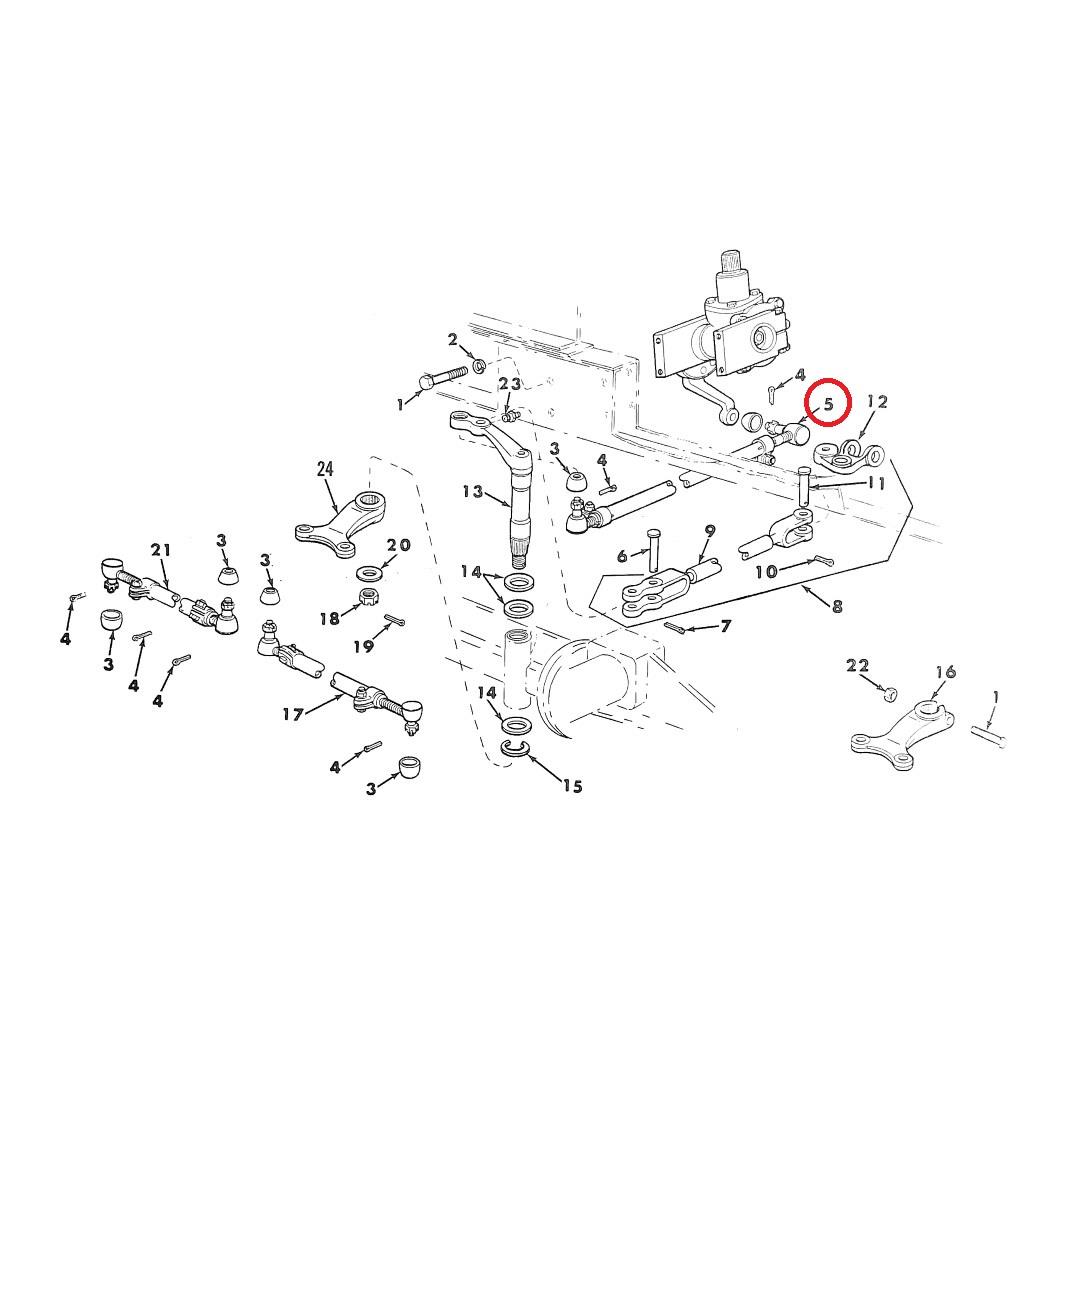 MU-188 | MU-188 Steering Linkage Drag Link Assembly with Long Sleeve Mule M274 Parts Diagram 2 (Large).jpg